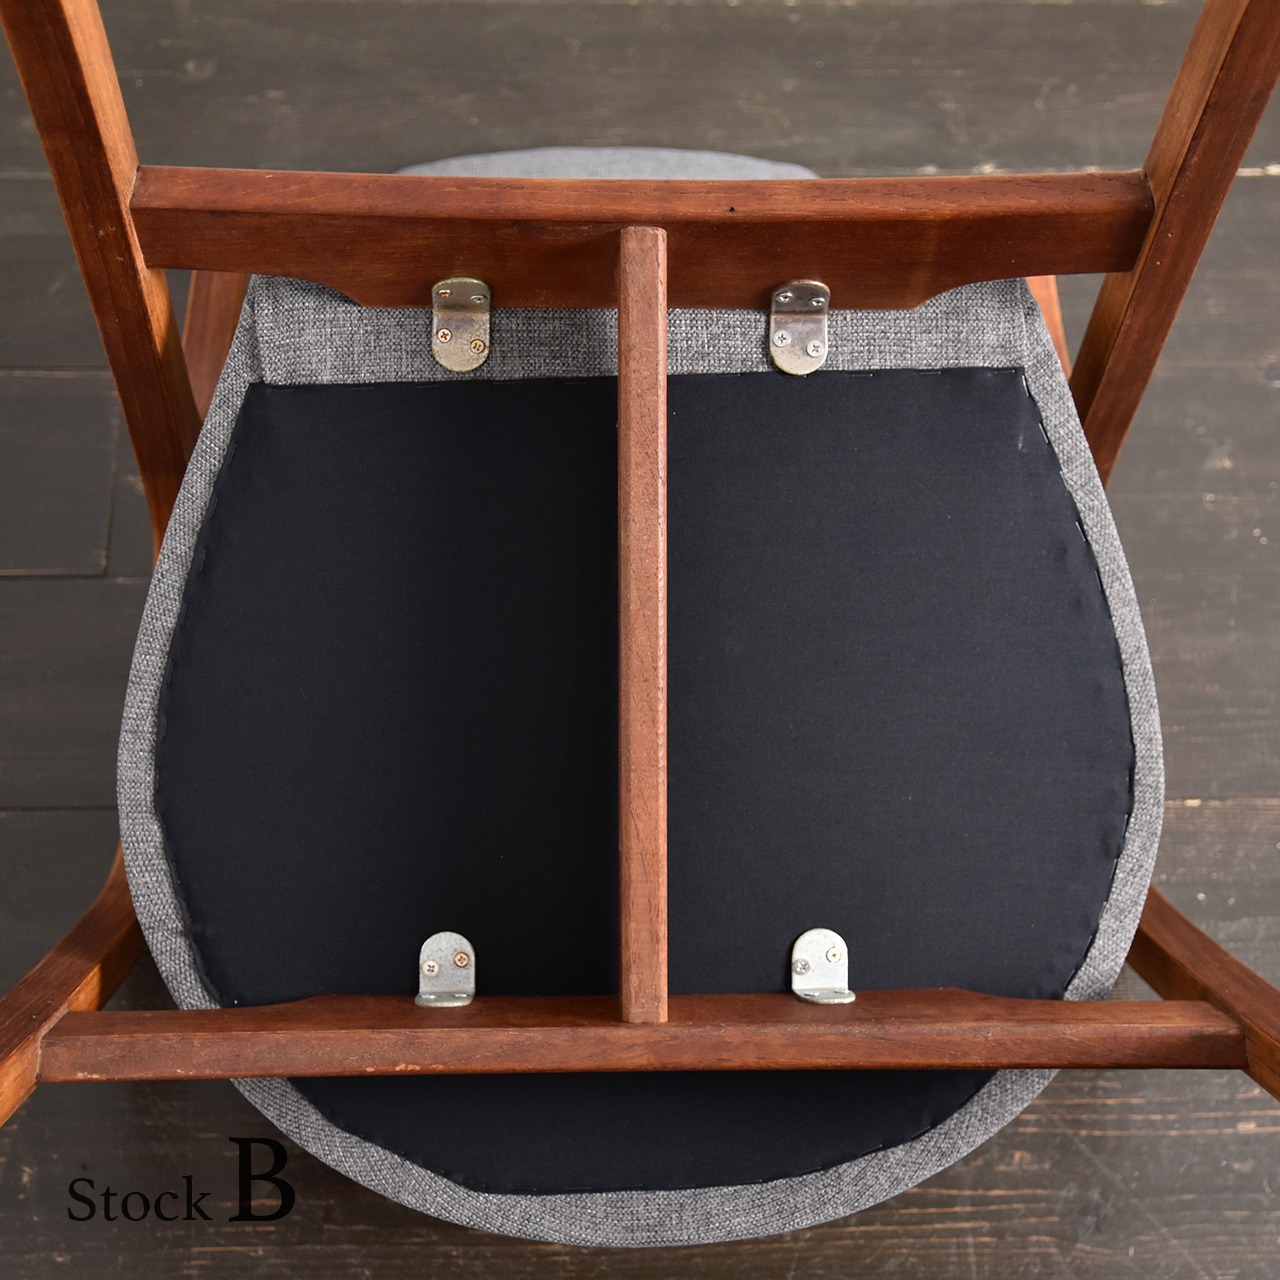 Antler Chair 【B】/ 天童木工 アントラーチェア / BNS-M-002B